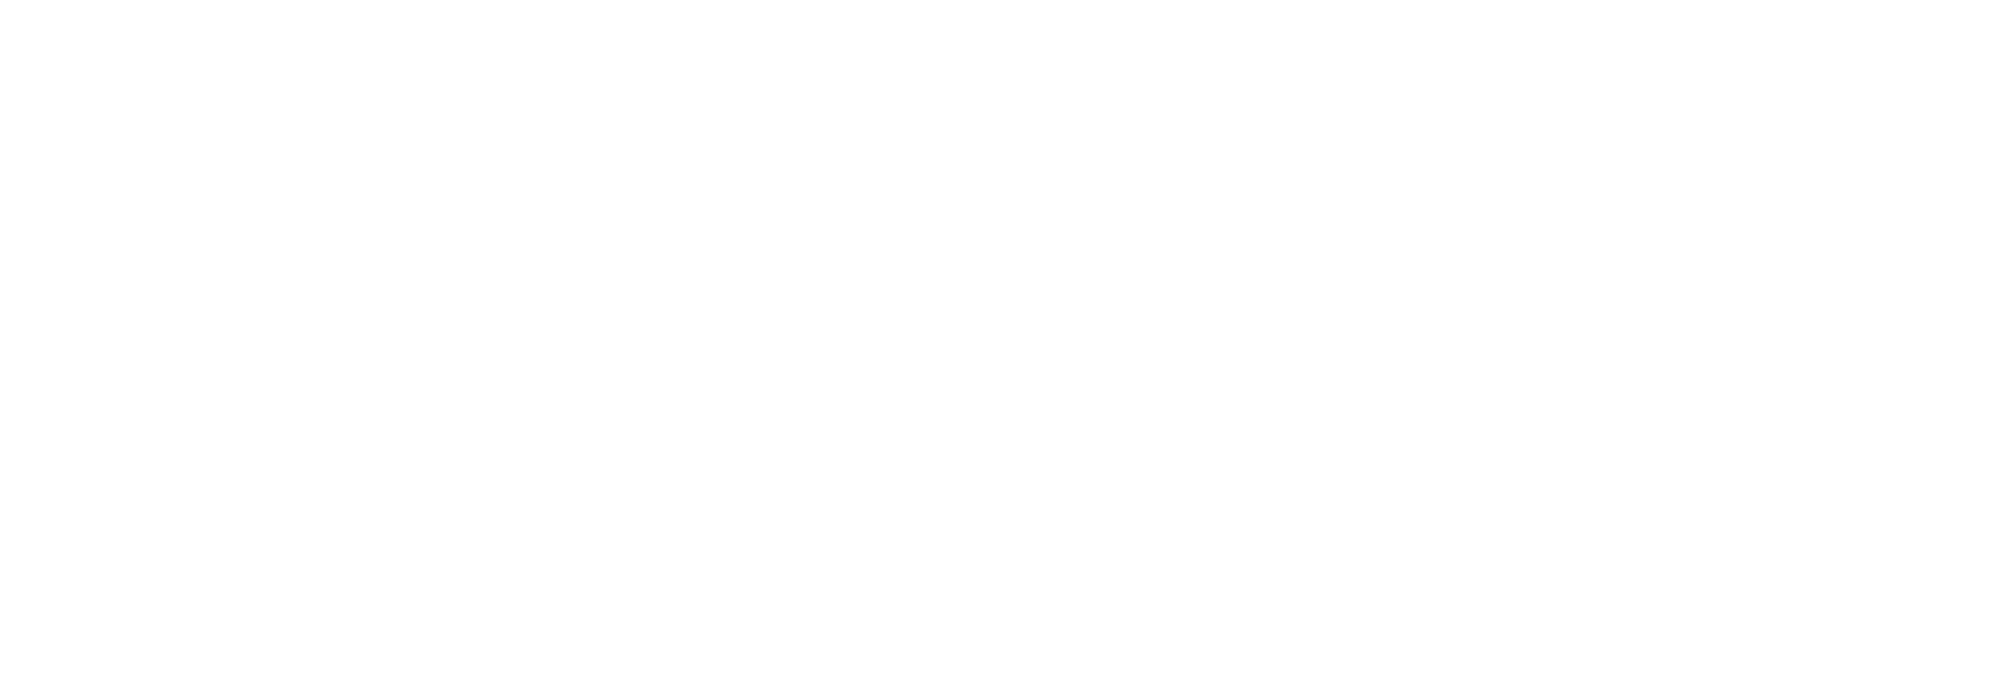 Rickmansworth Swim Club